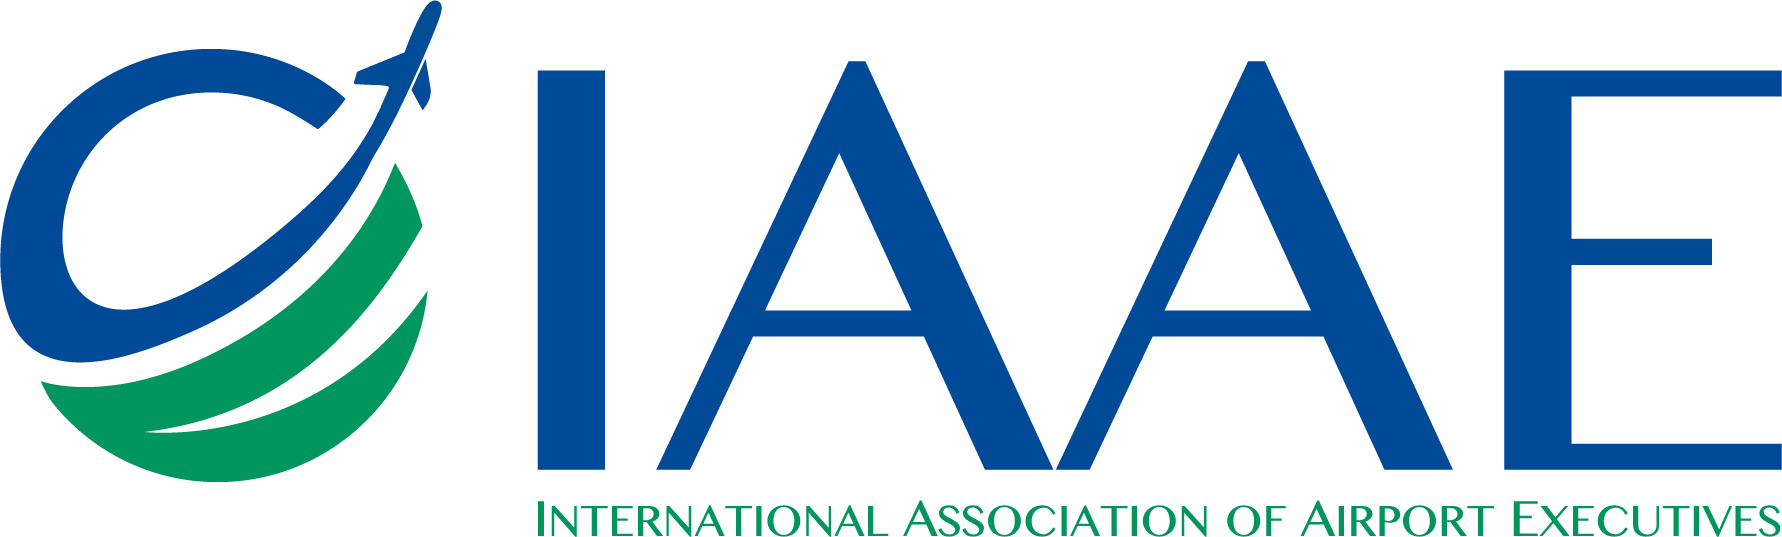 International Association of Airport Executives